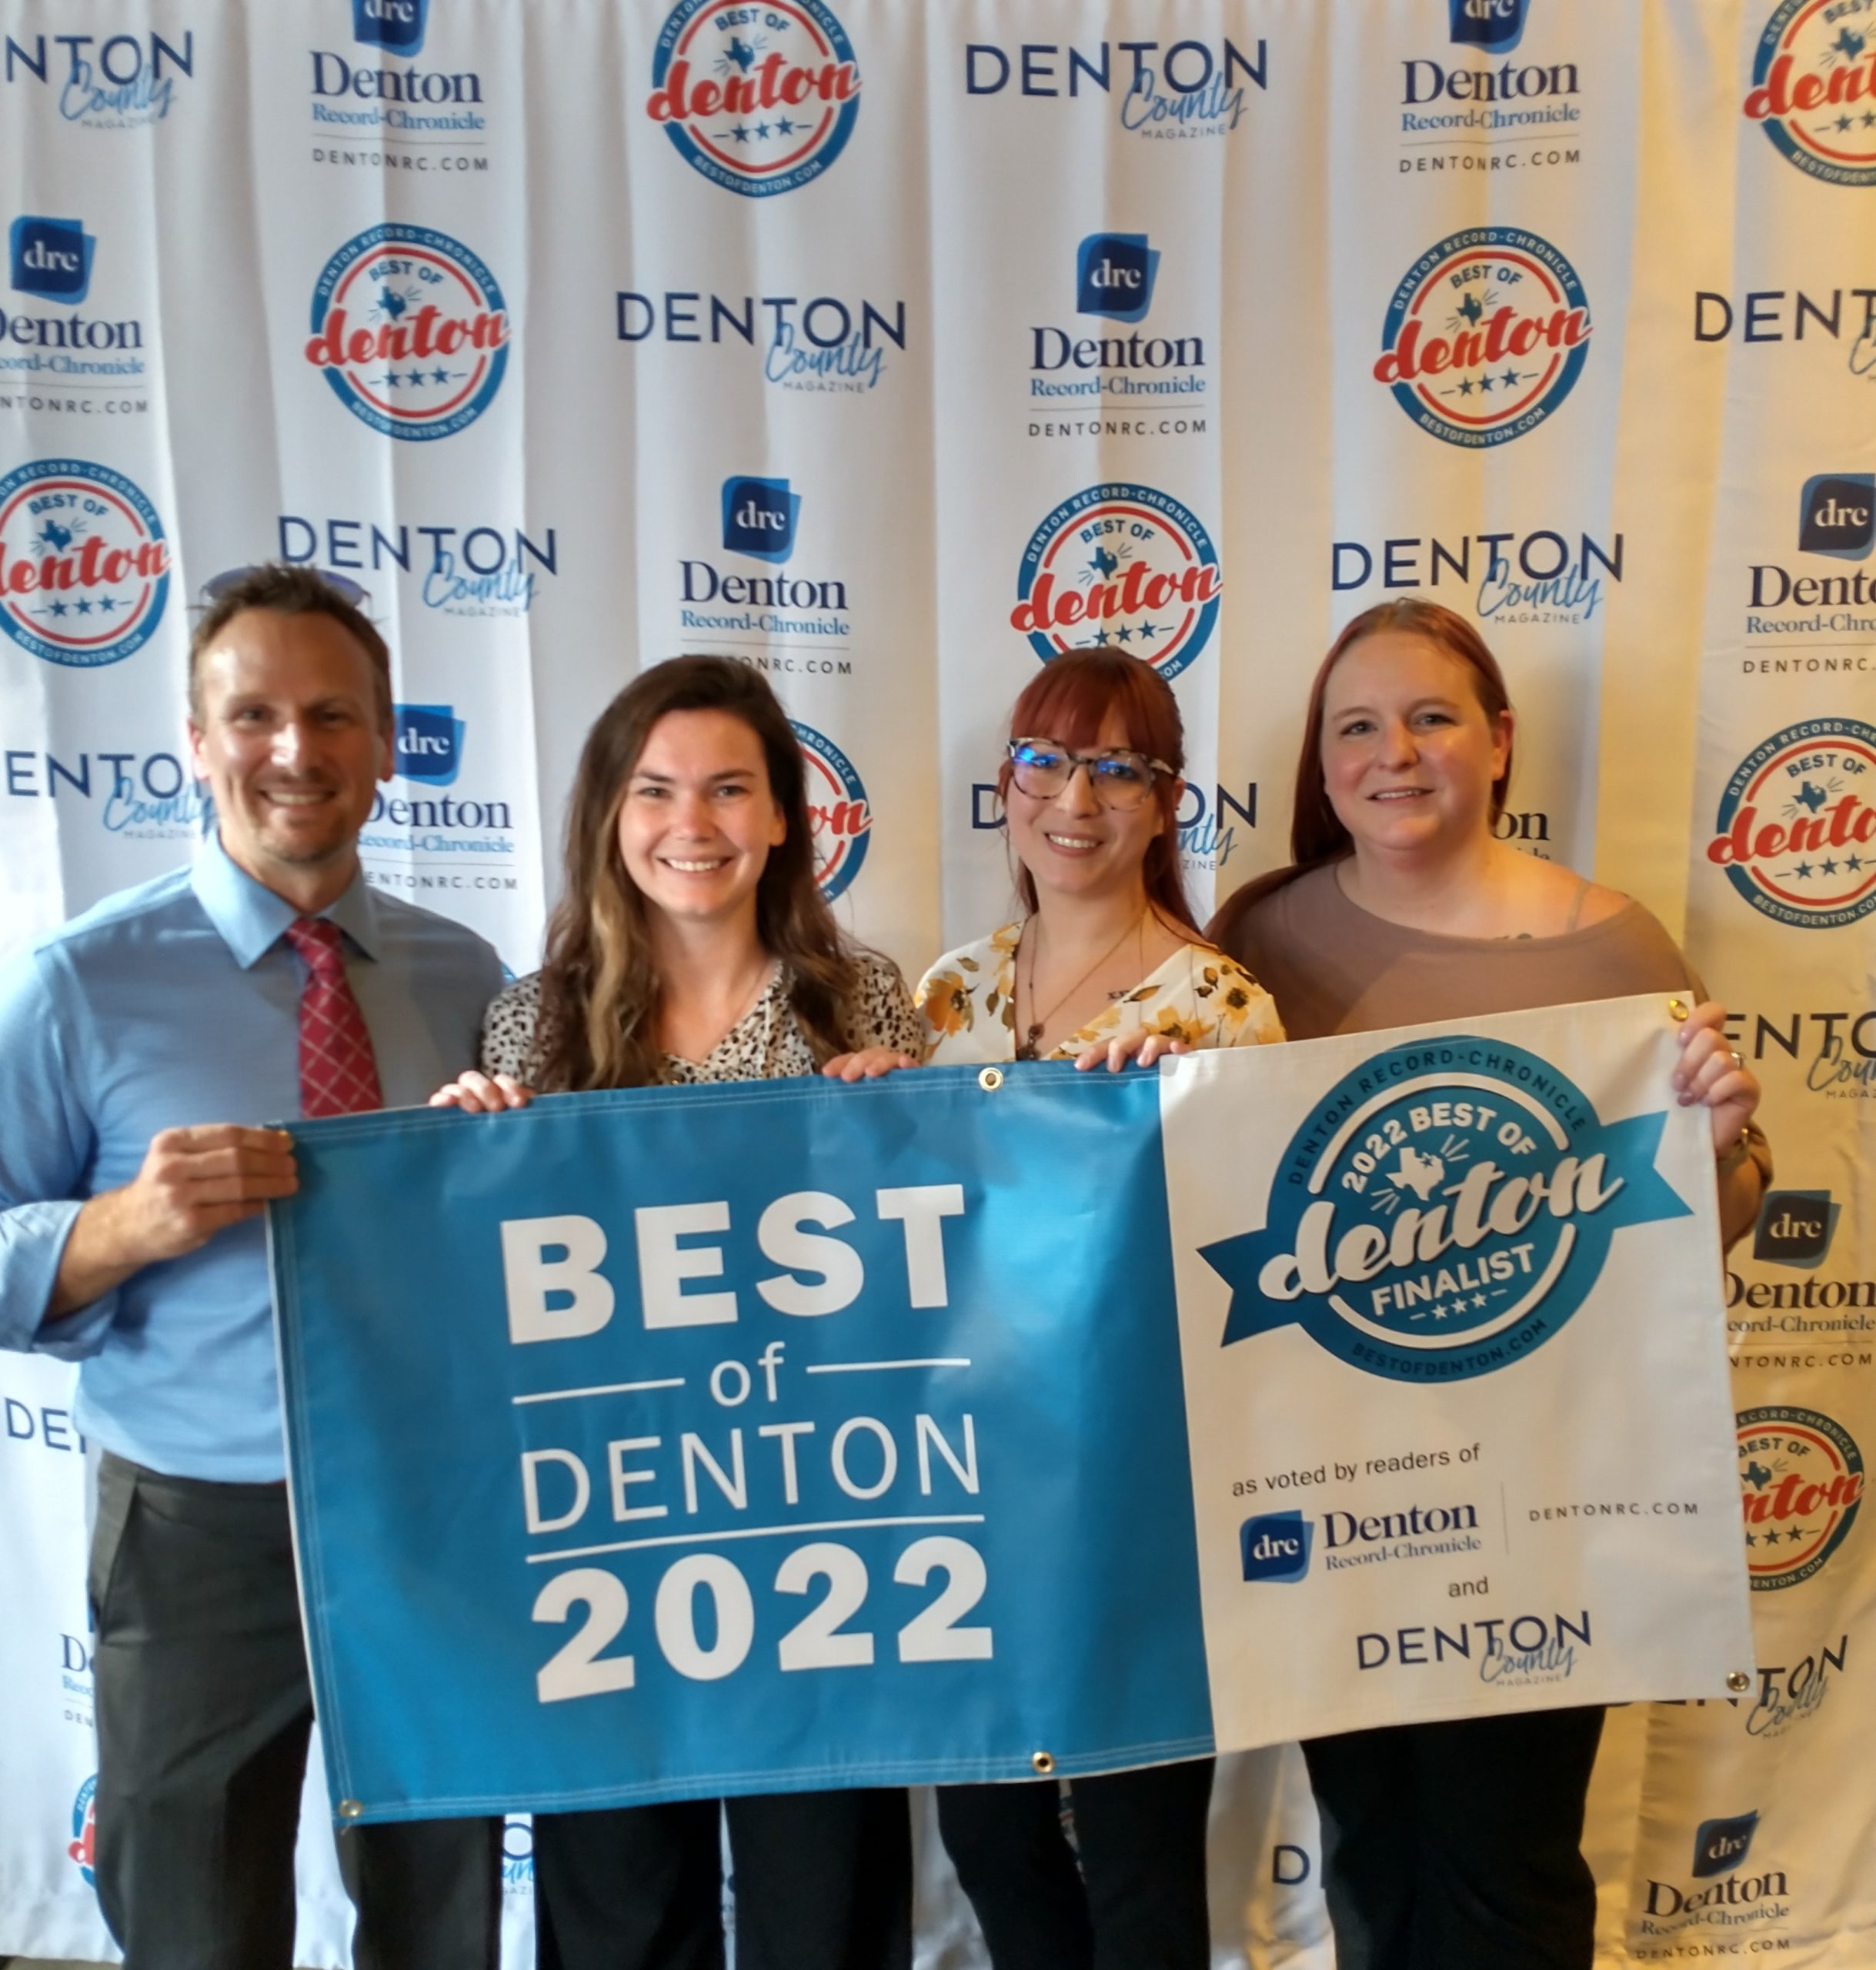 Previous Winners Best of Denton